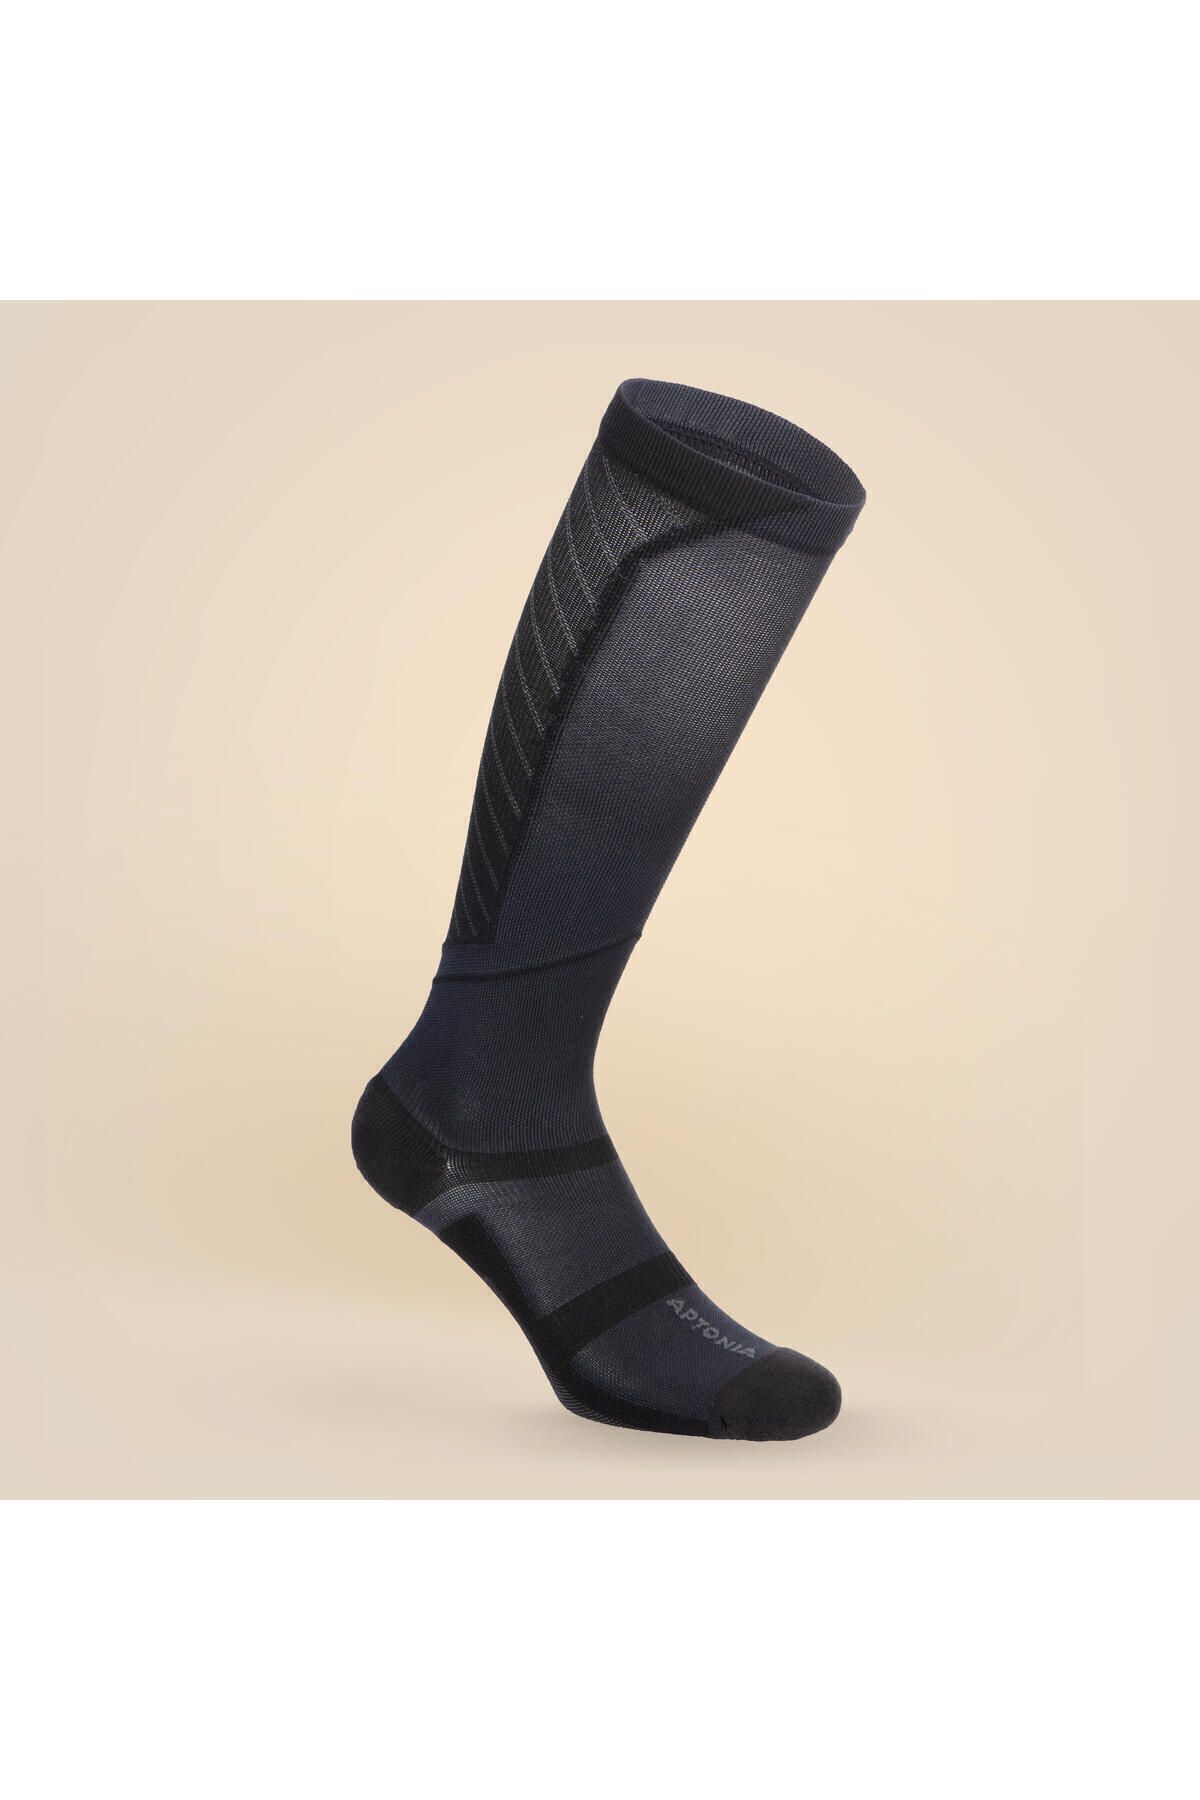 Decathlon Kompresyon Çorabı - Siyah